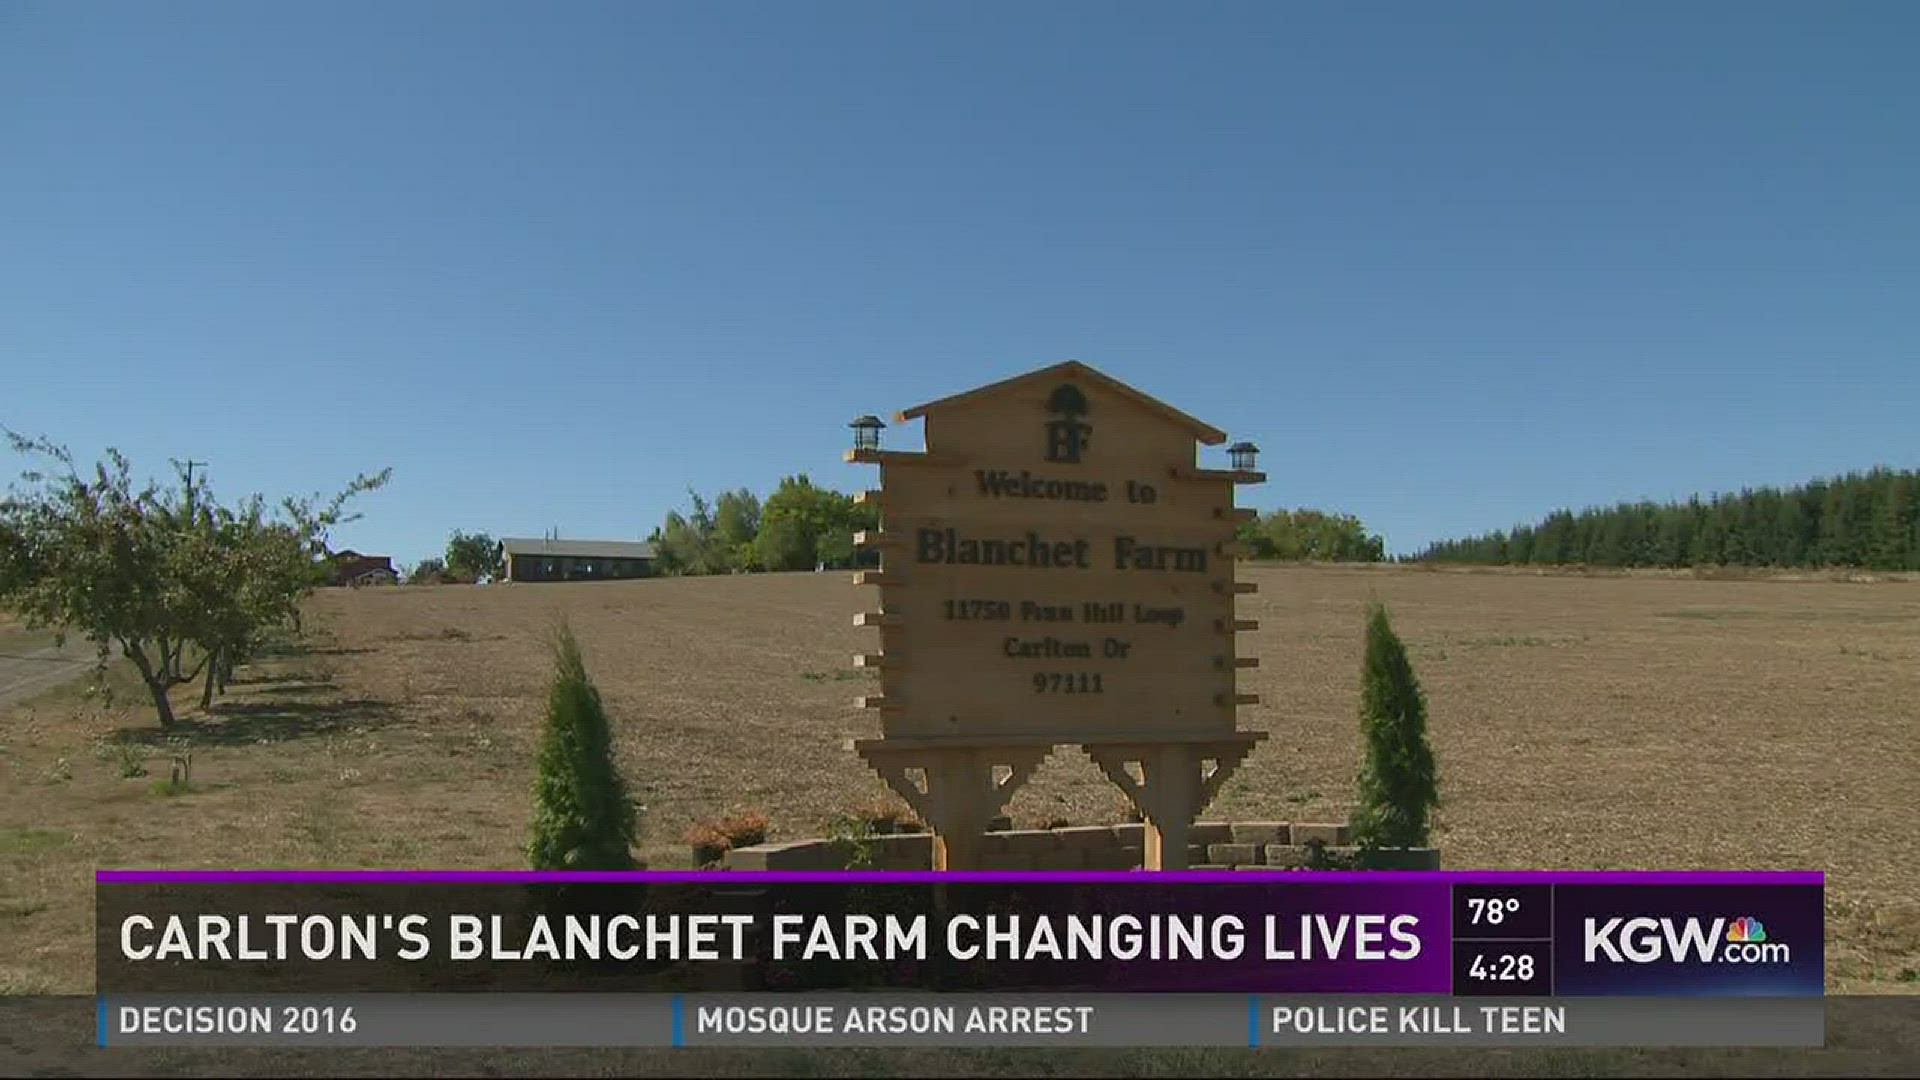 Carlton's Blanchet Farm changing lives